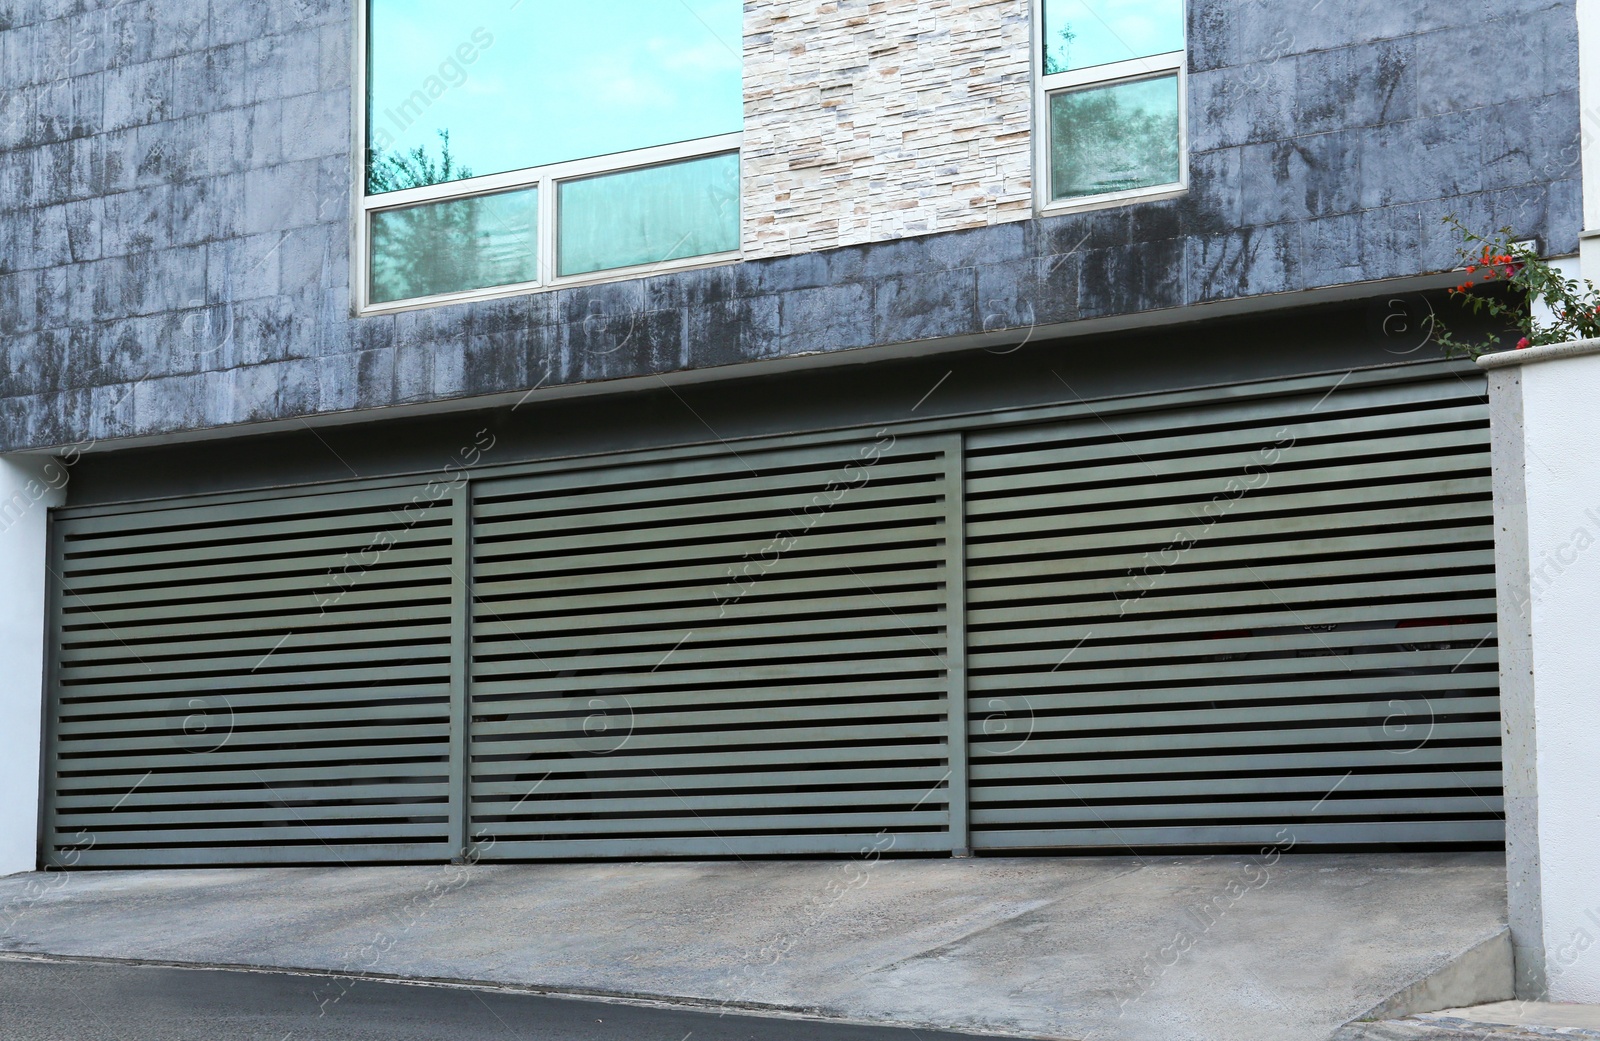 Photo of Closed roller shutter gates of modern garage